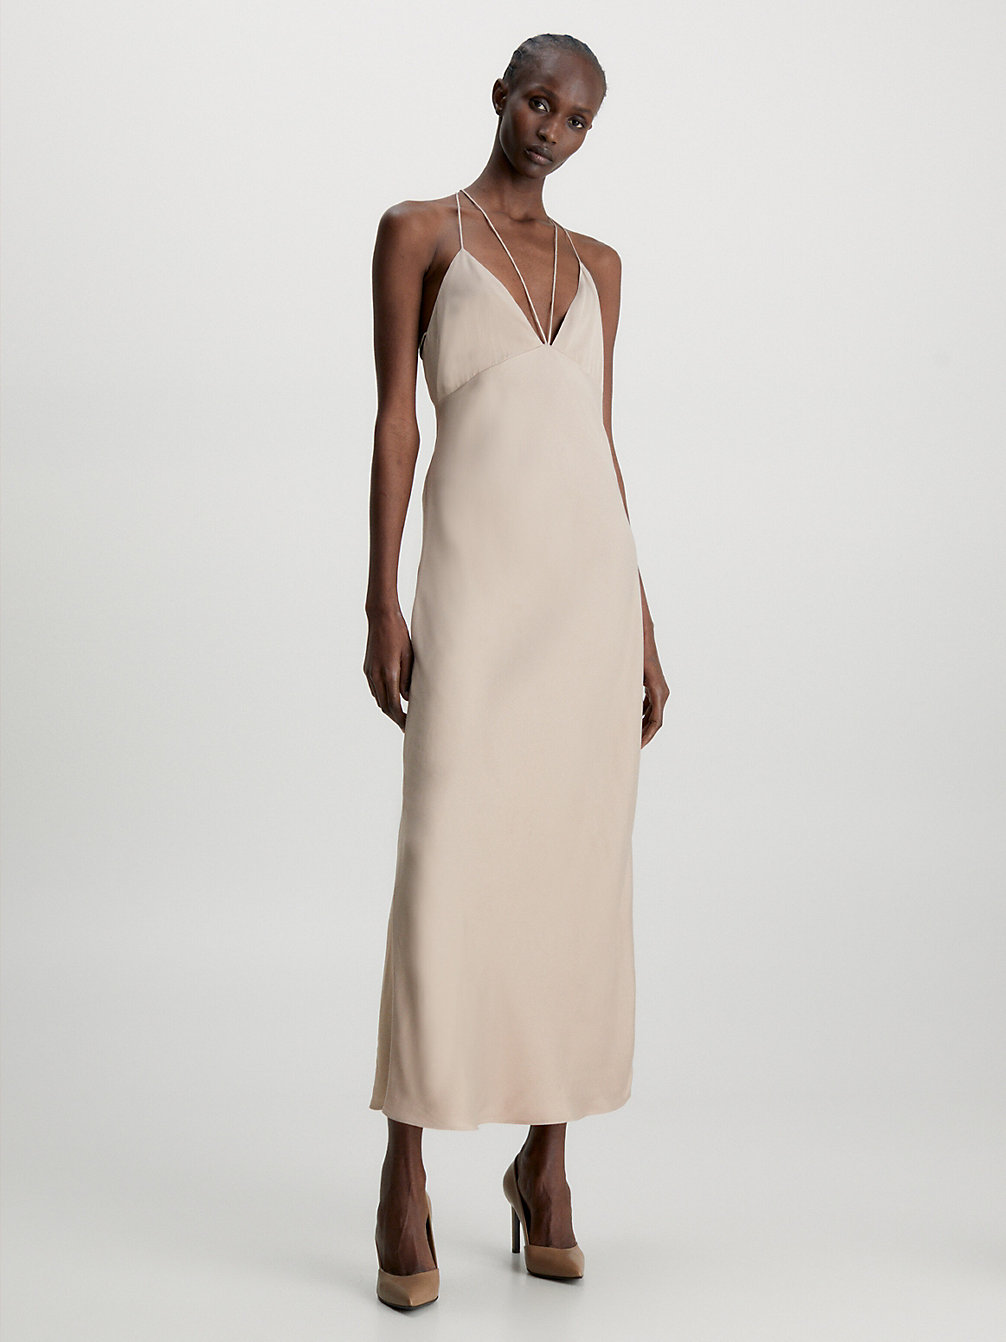 NATURAL Slim Low Back Slip Dress undefined women Calvin Klein